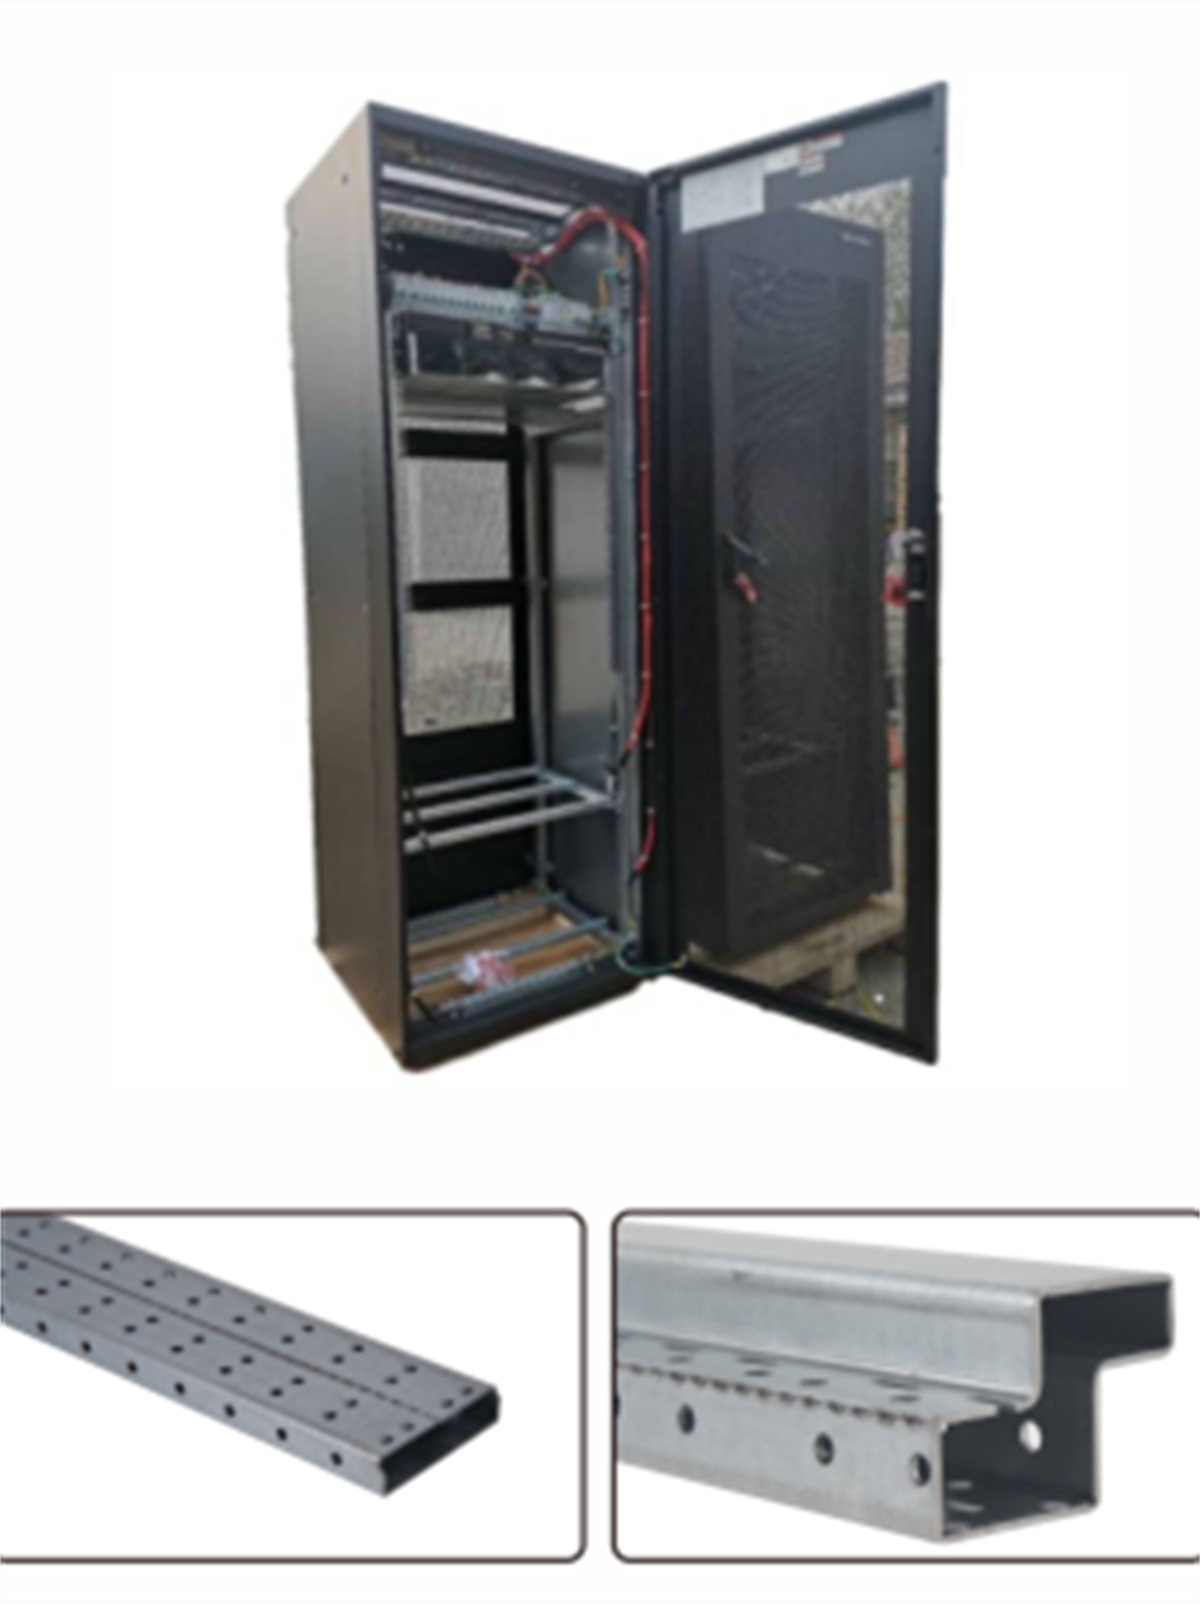 HUAWEI (server cabinet beam & upright)